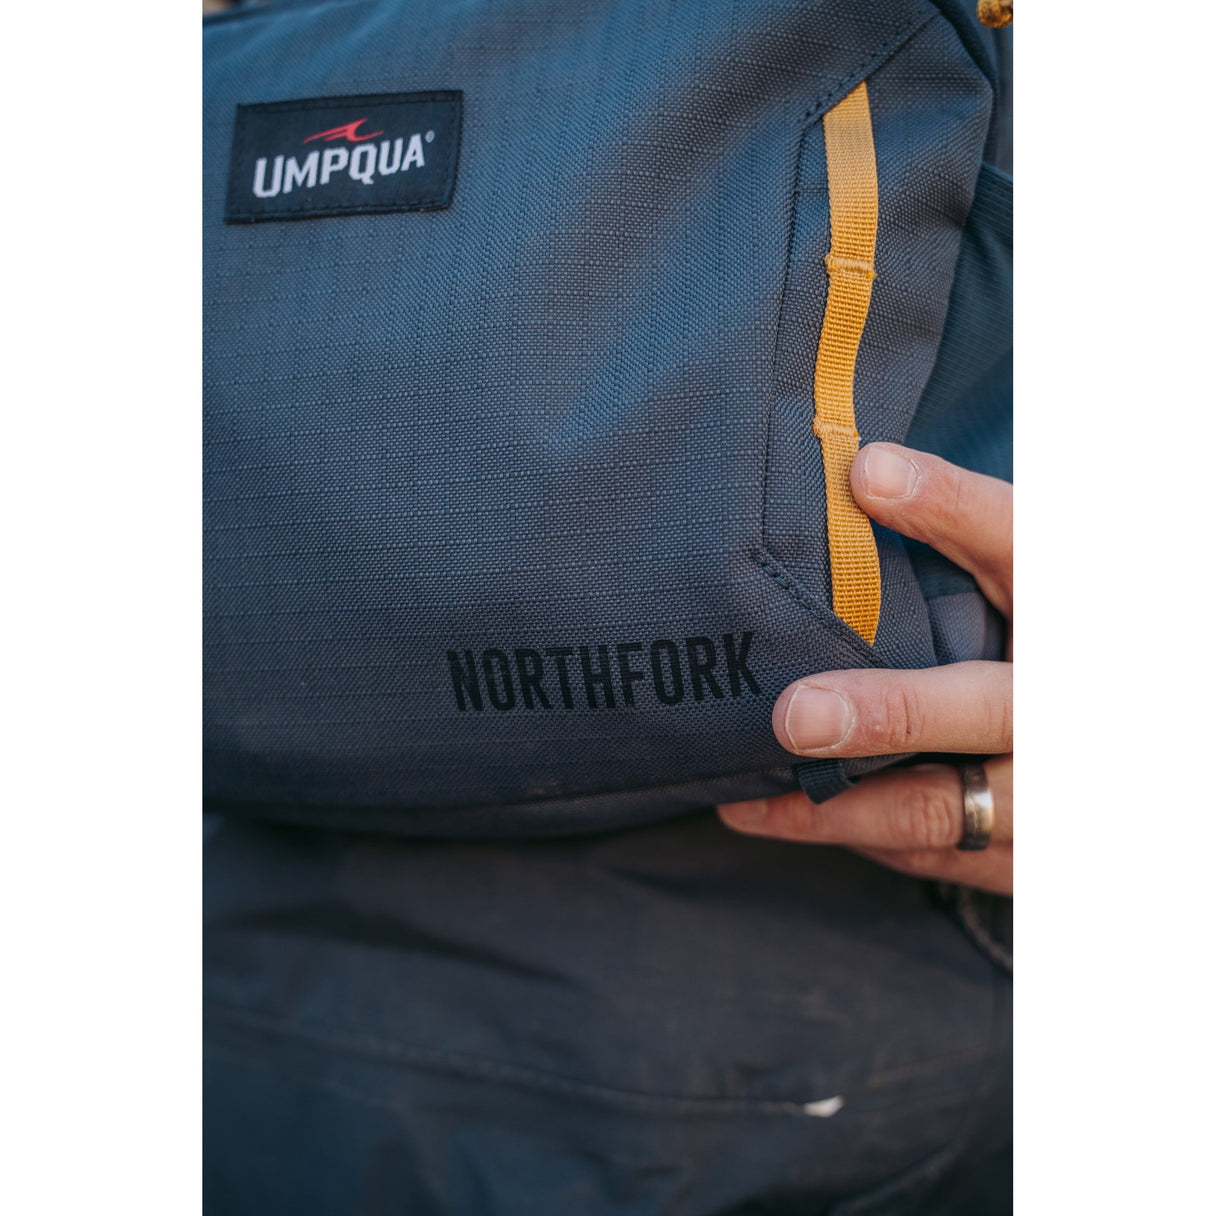 Umpqua Northfork Chest Pack